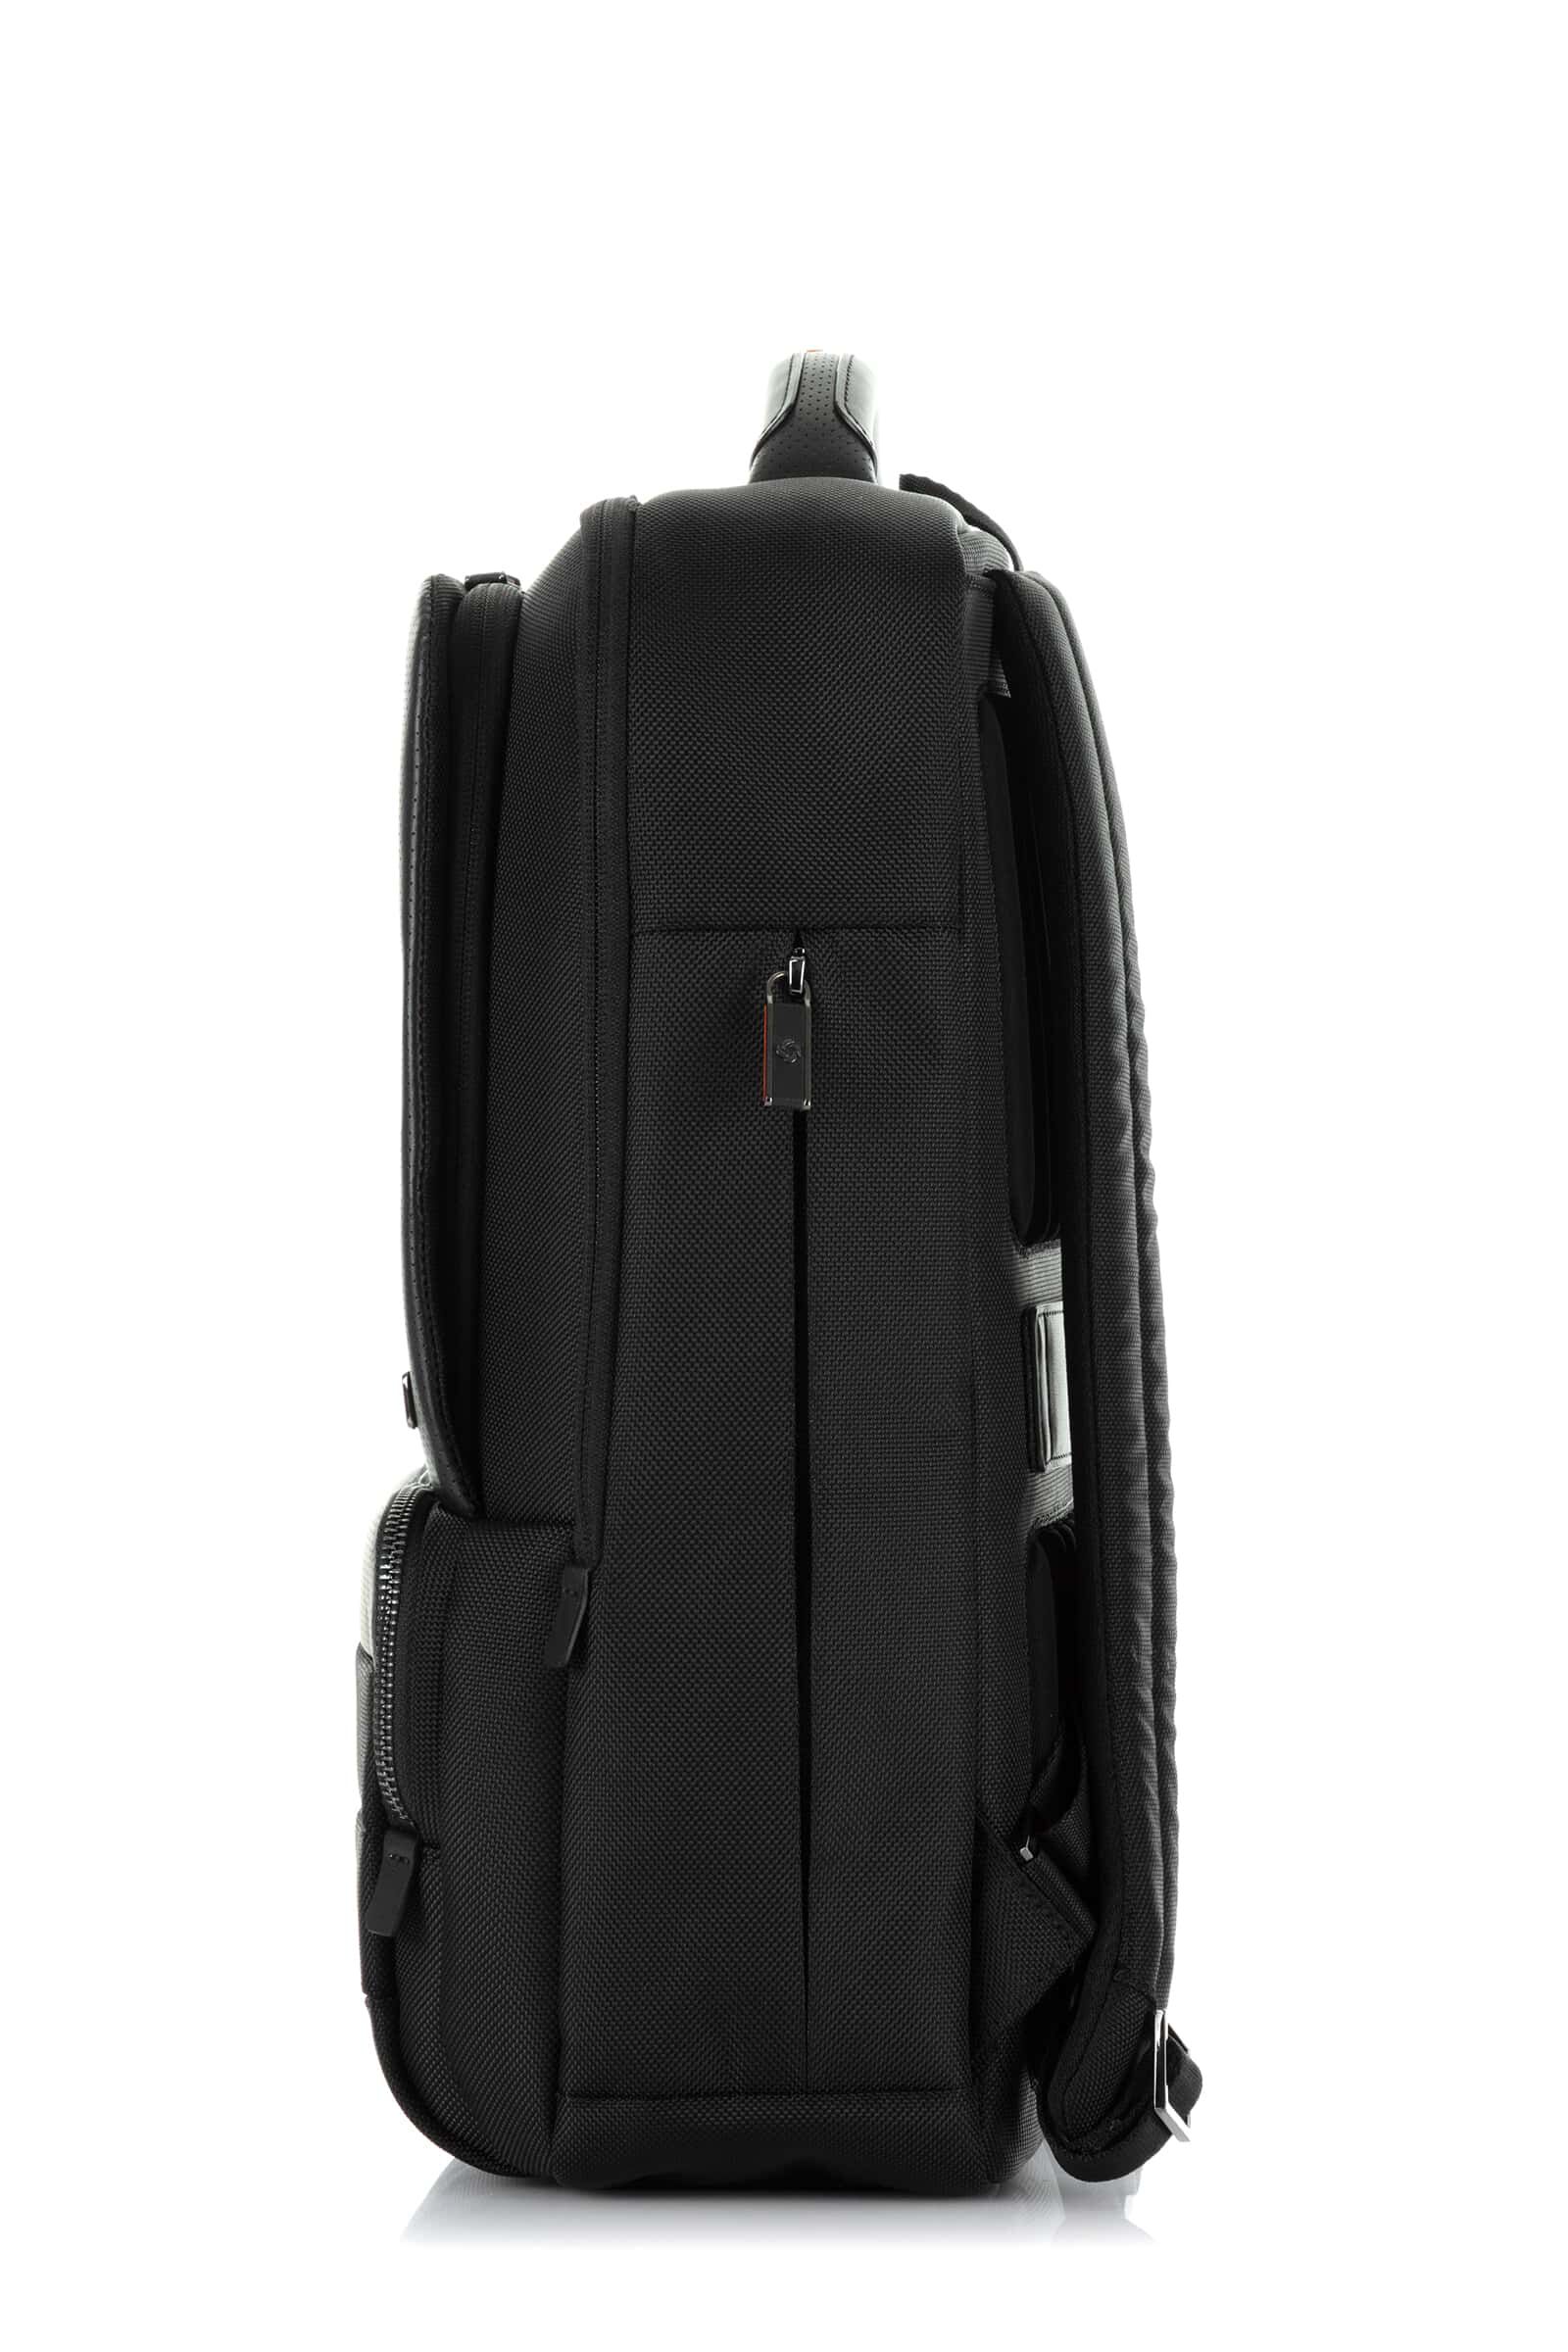 Samsonite X5 Logo Black Gray Backpack Carry On Rolling Bag Luggage Business  | eBay